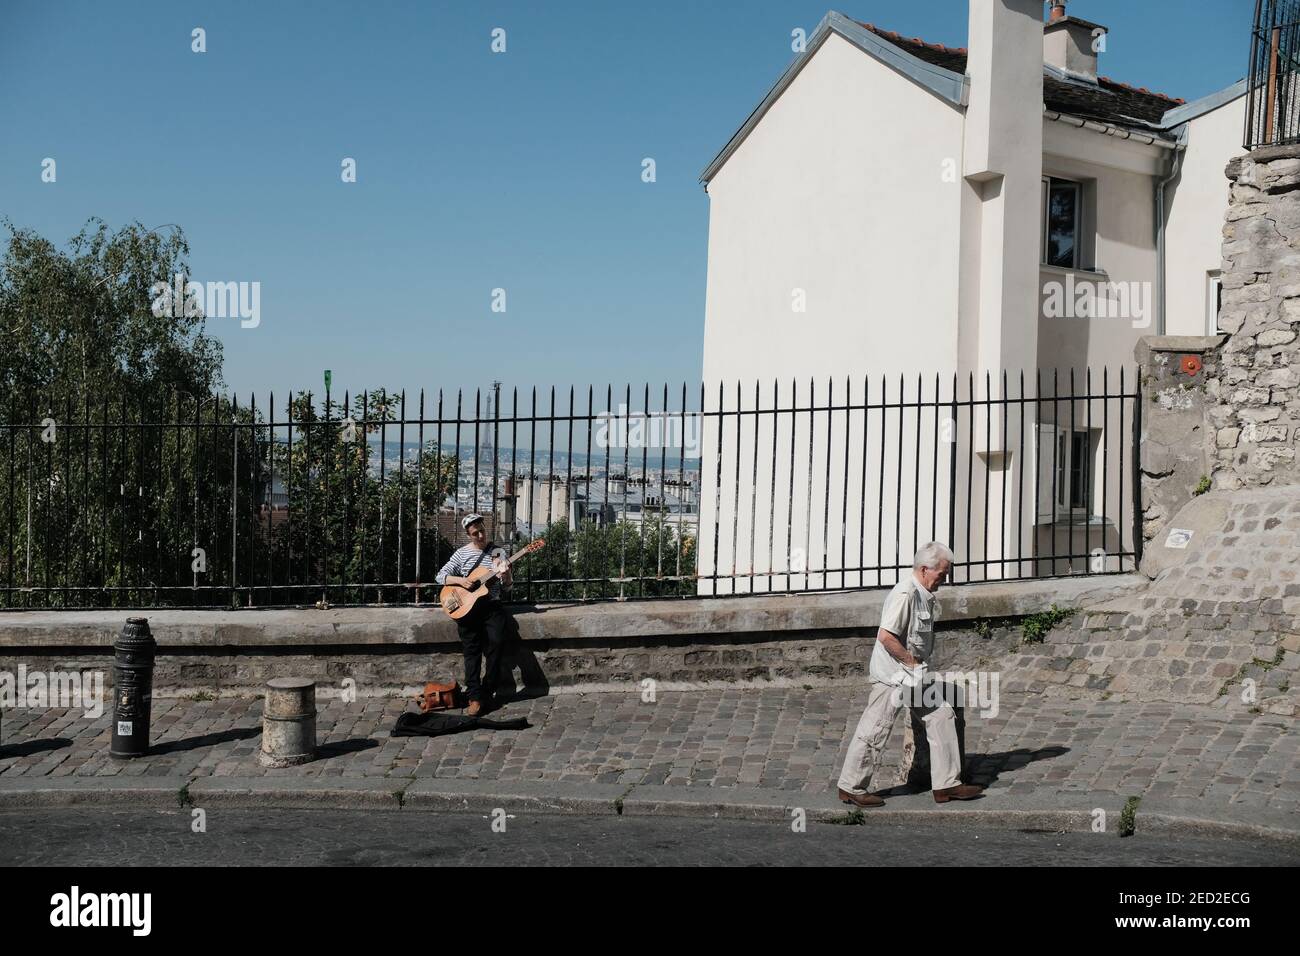 MONTMARTRE, PARIS - 29TH JUNE 2019: An elderly man walking past a musician busking on Rue Saint-Éleuthère in Montmartre. Stock Photo